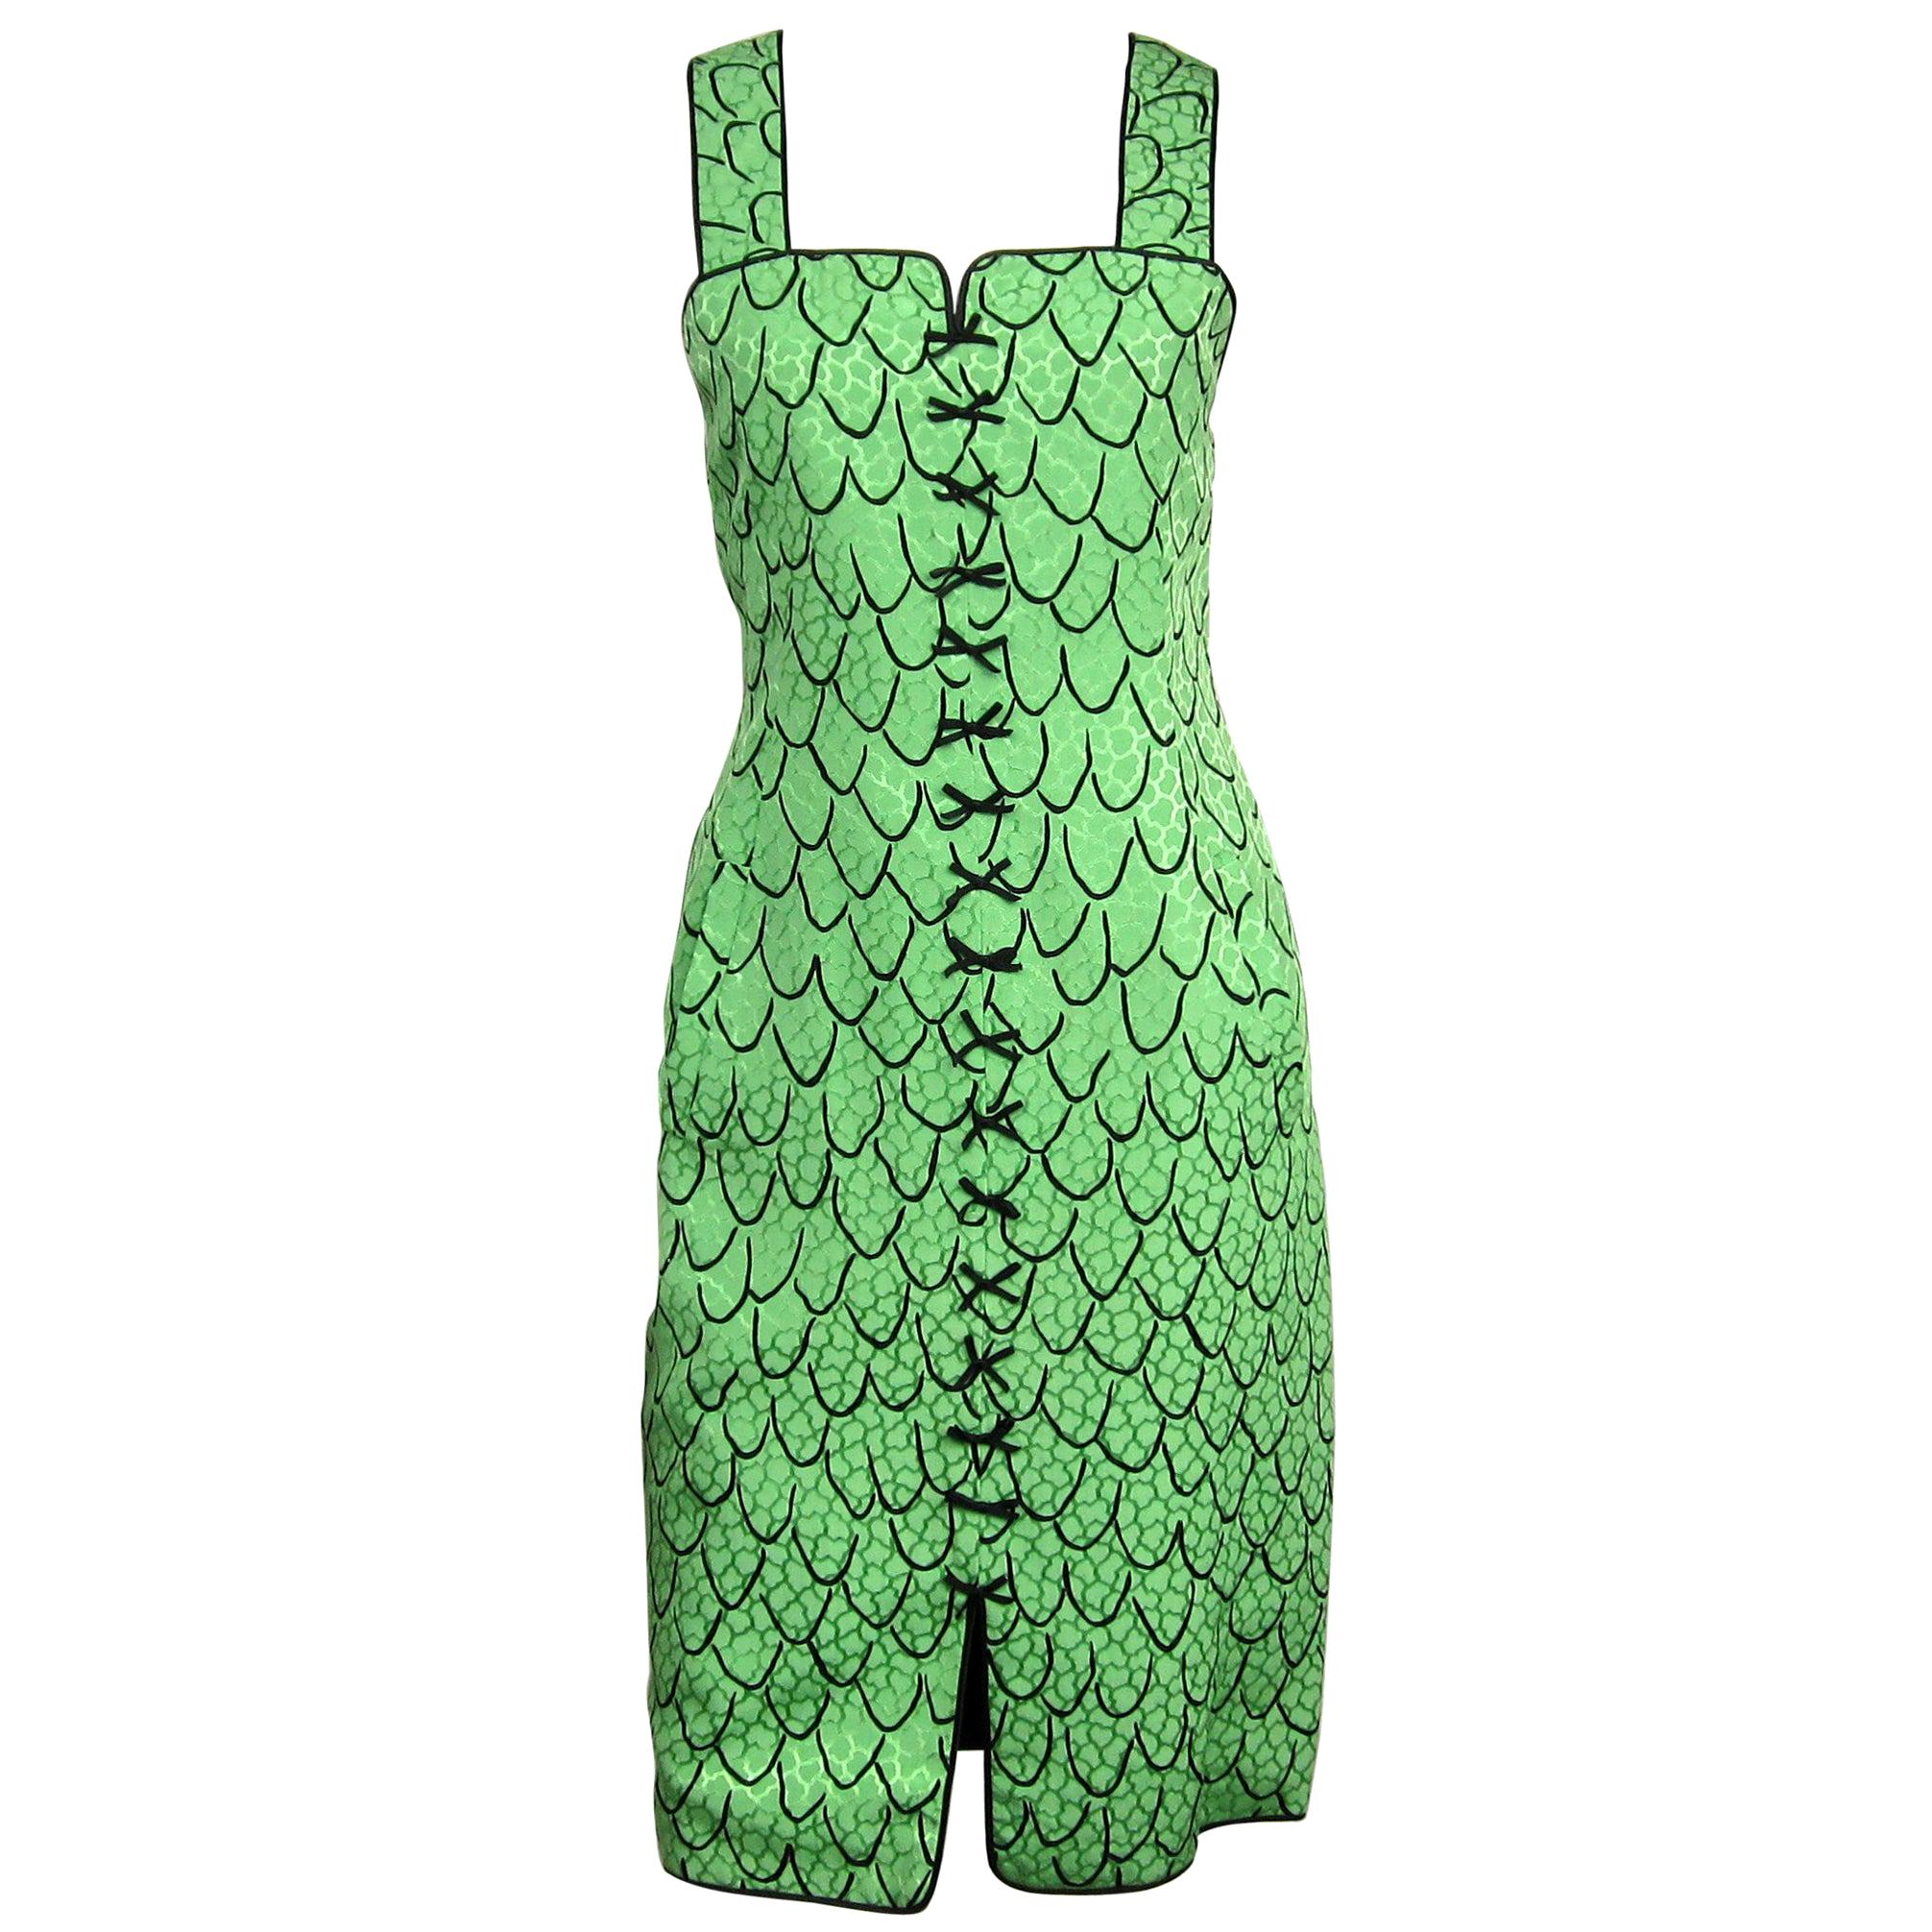 Geoffrey Beene Trompe L'oeil Green Dress New with tags 